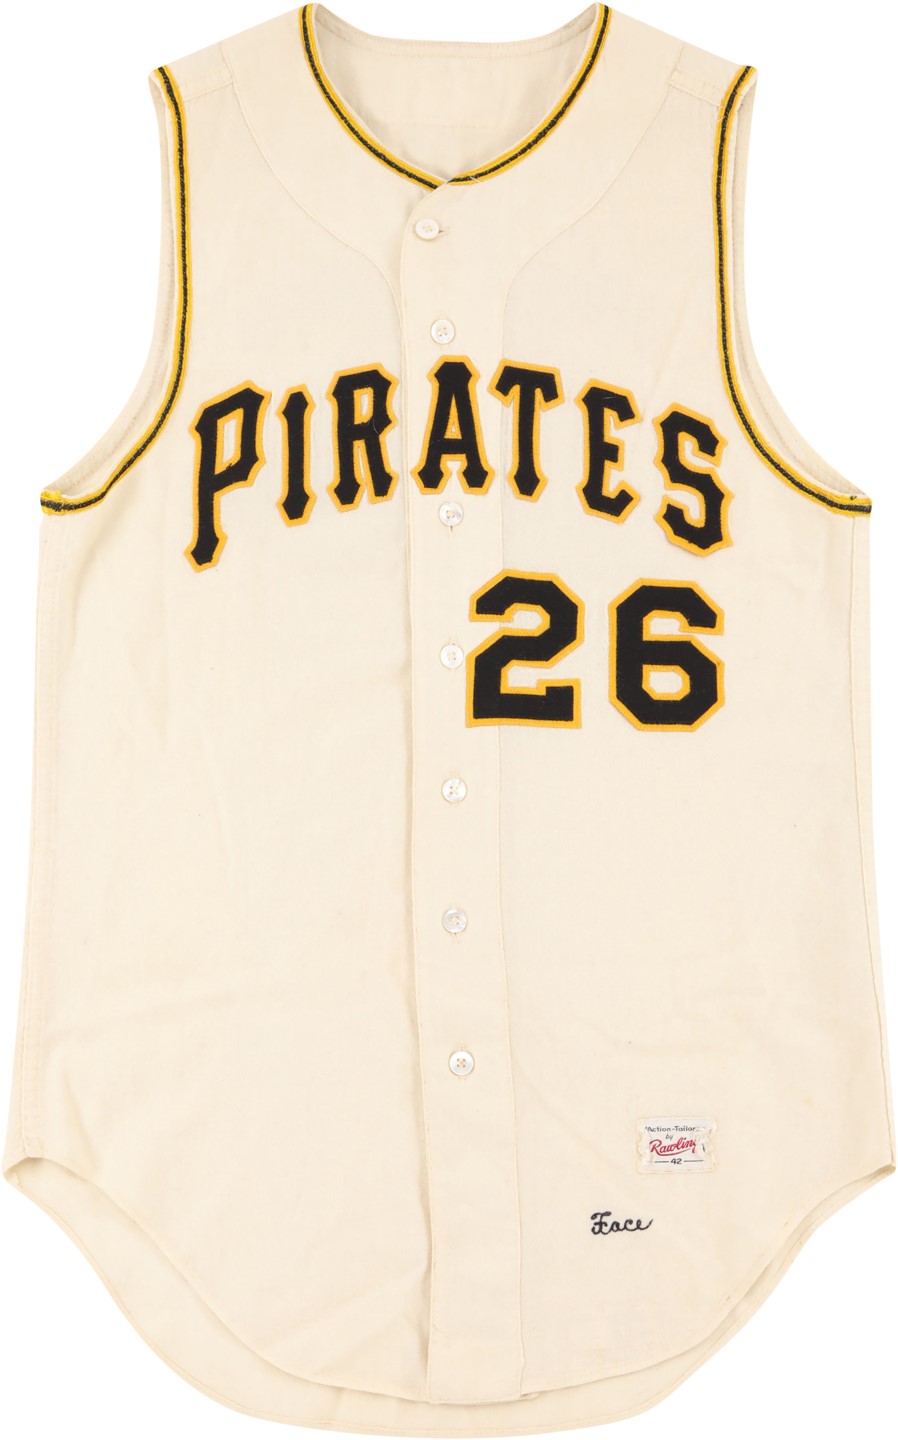 - 1962 Elroy Face Pittsburgh Pirates Game Worn Jersey